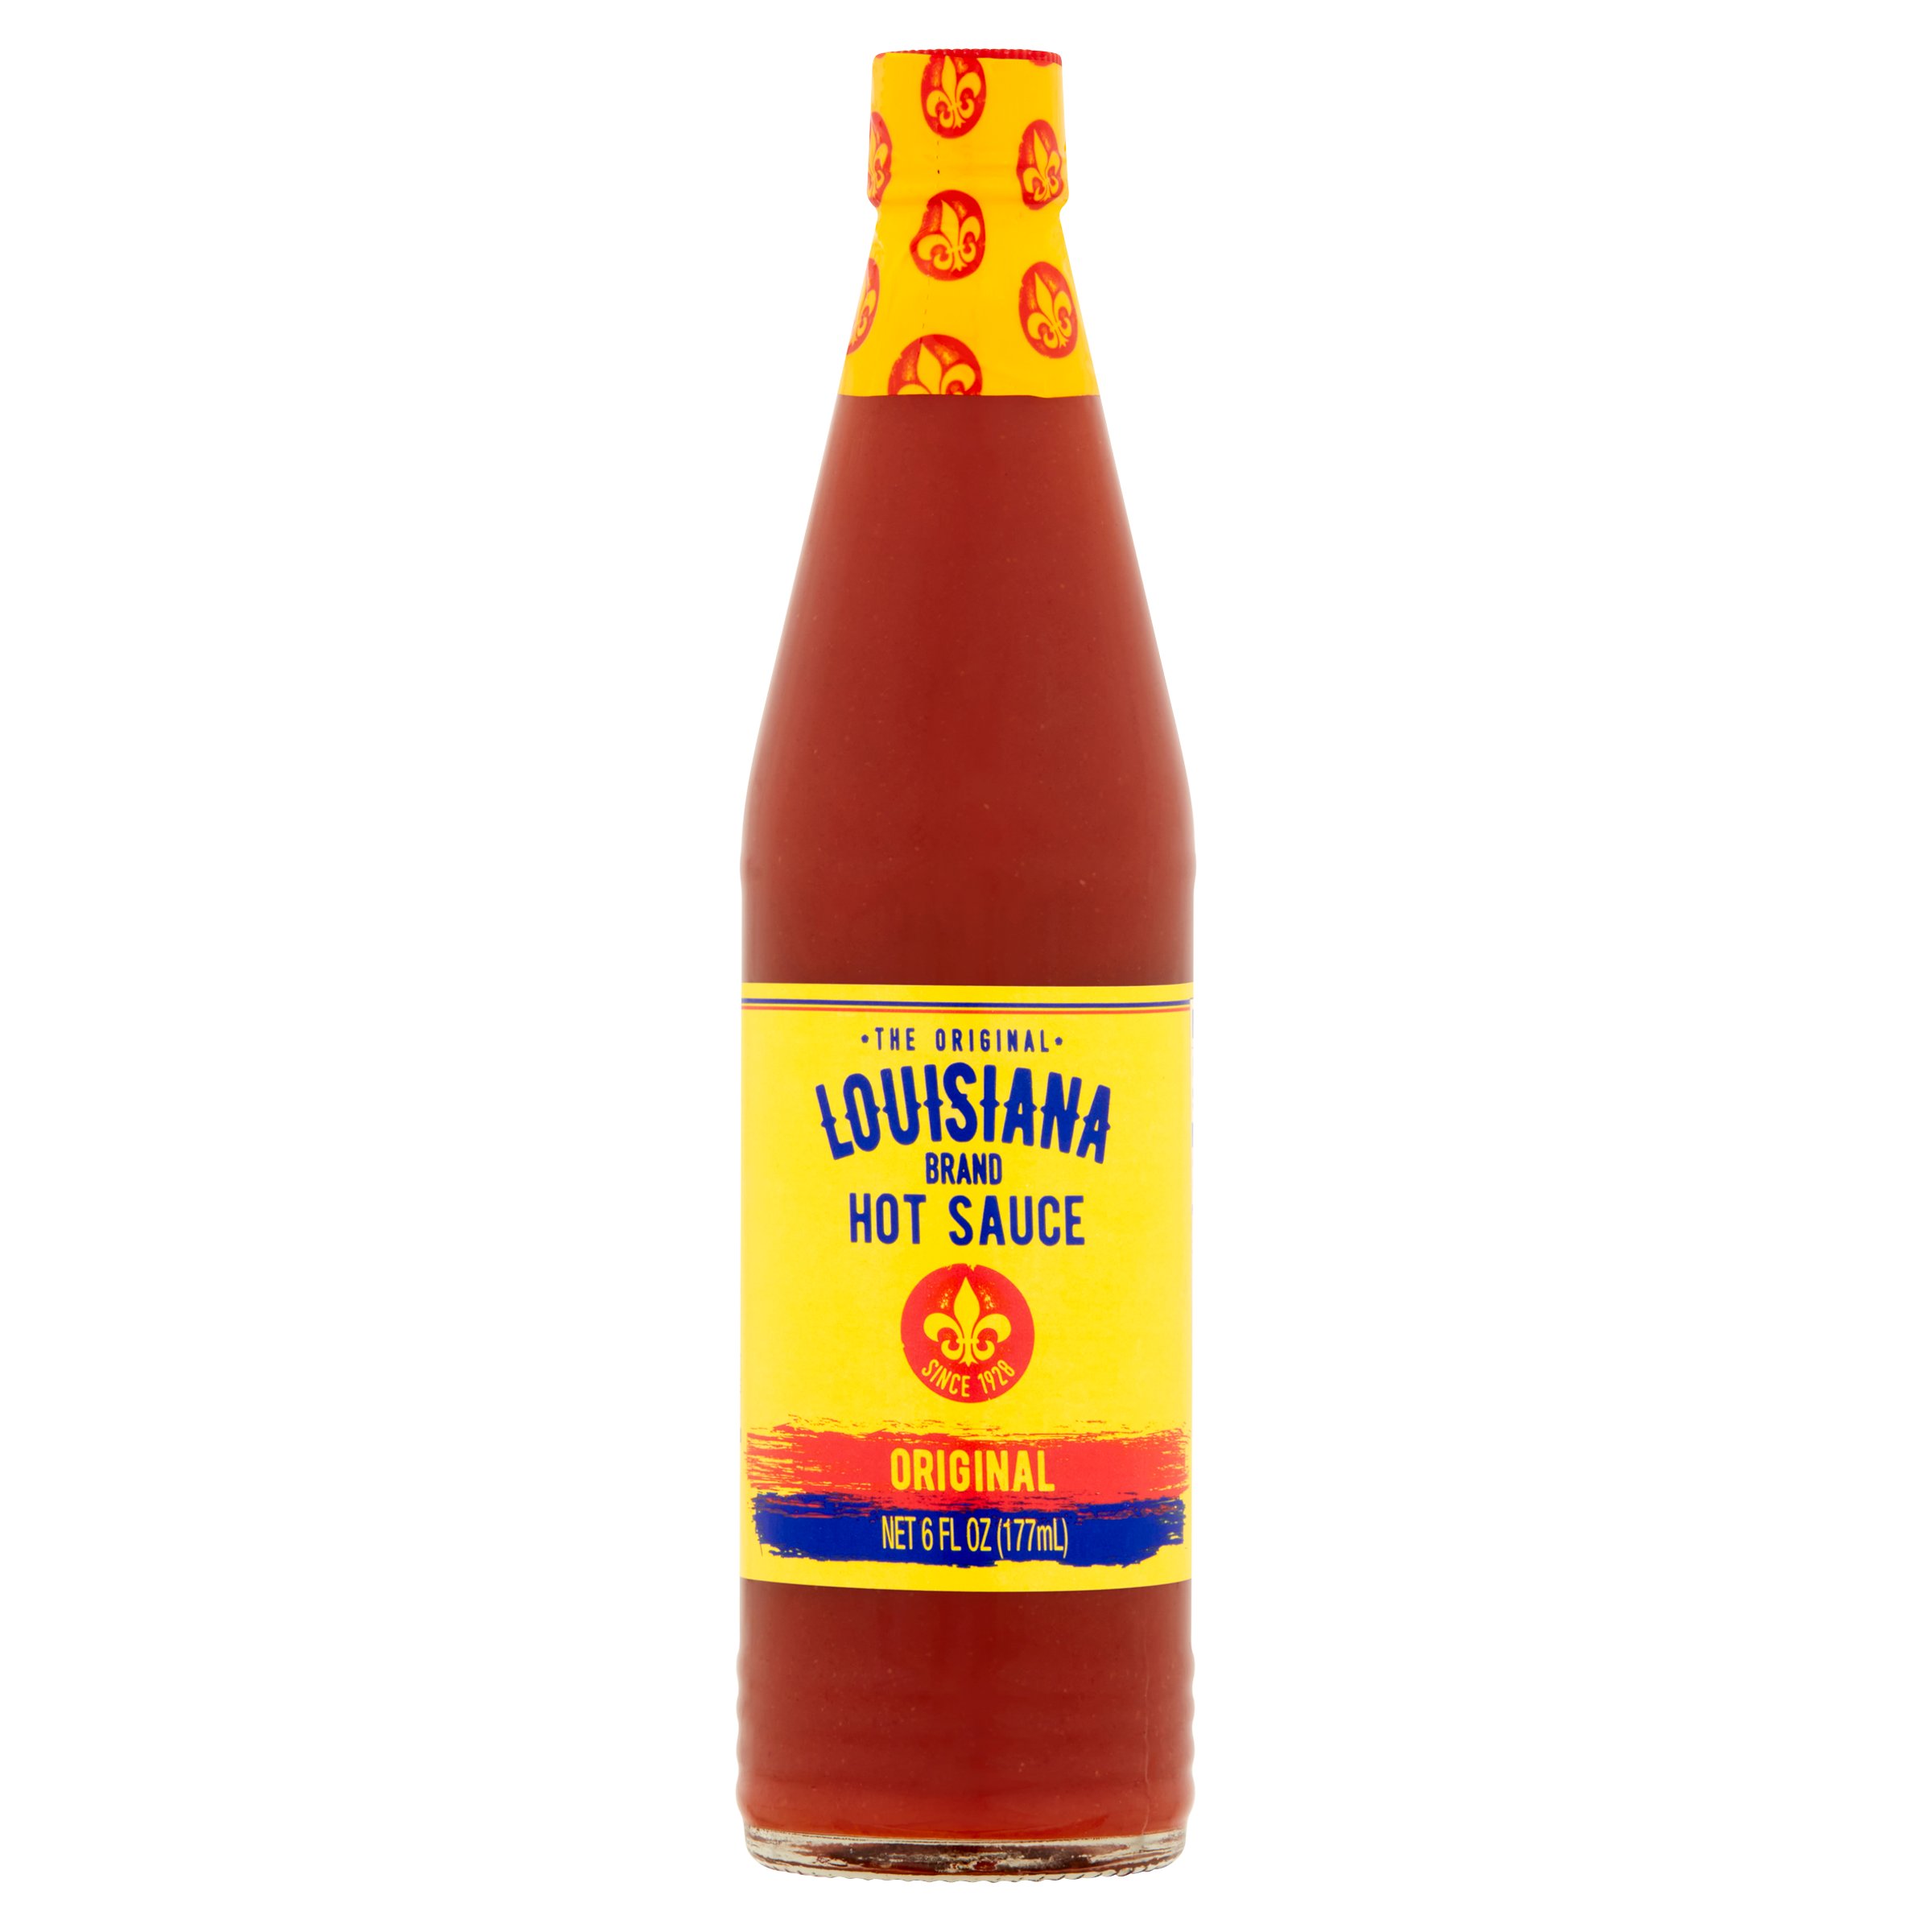 louisiana supreme wing sauce